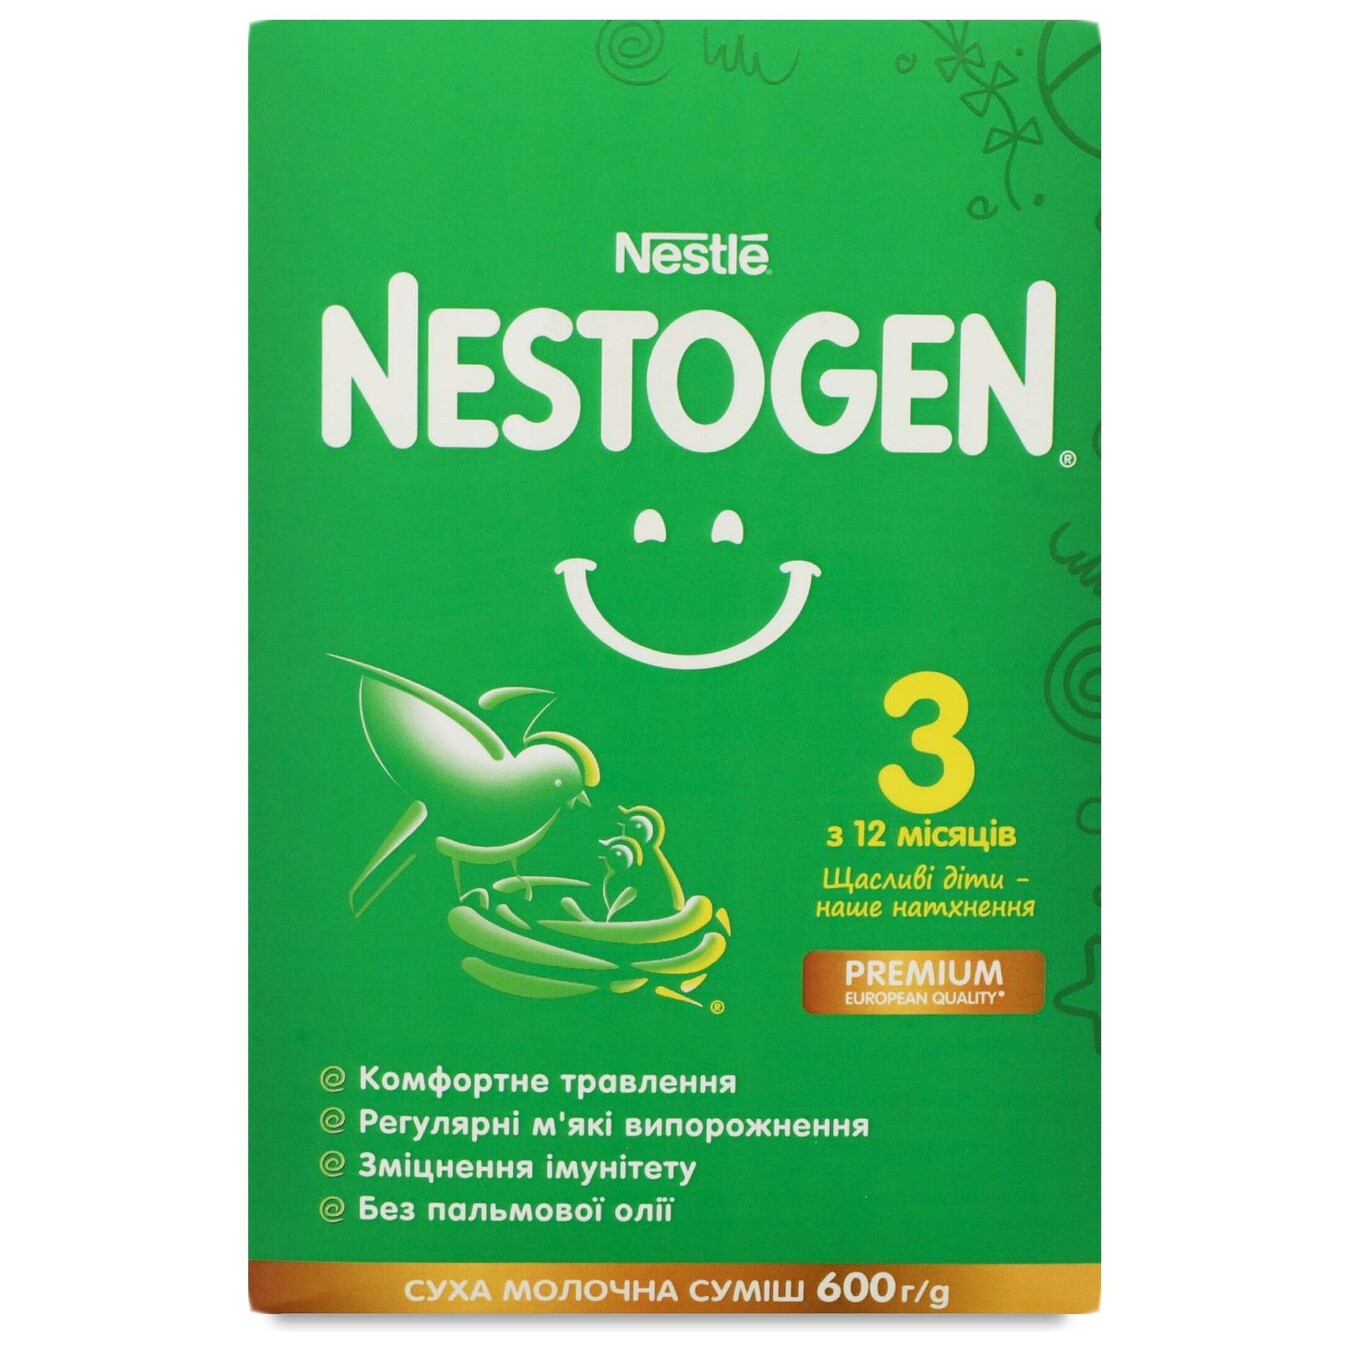 Nestogen 3 dry milk mixture for children from 12 months with lactobacilli 600g